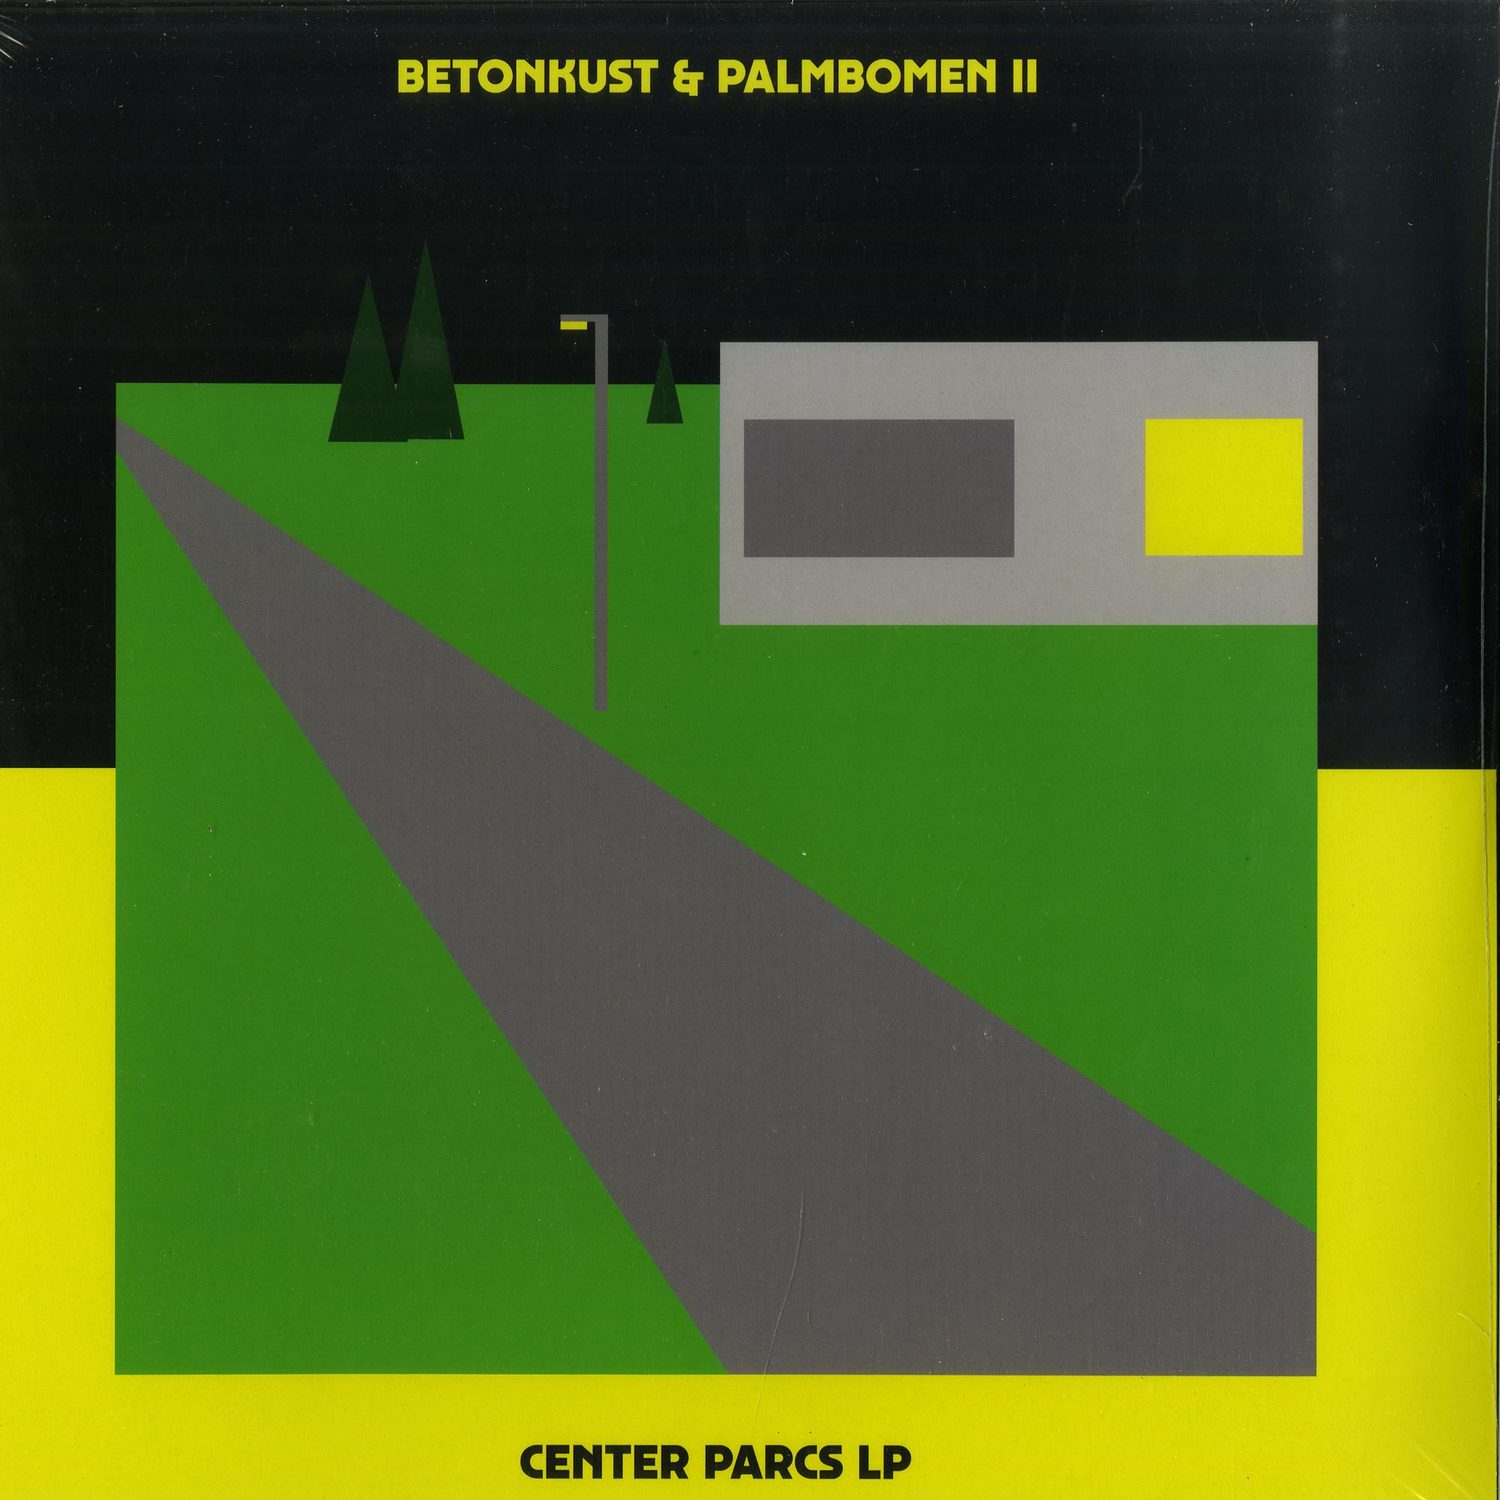 Betonkust & Palmbomen II - CENTER PARCS 